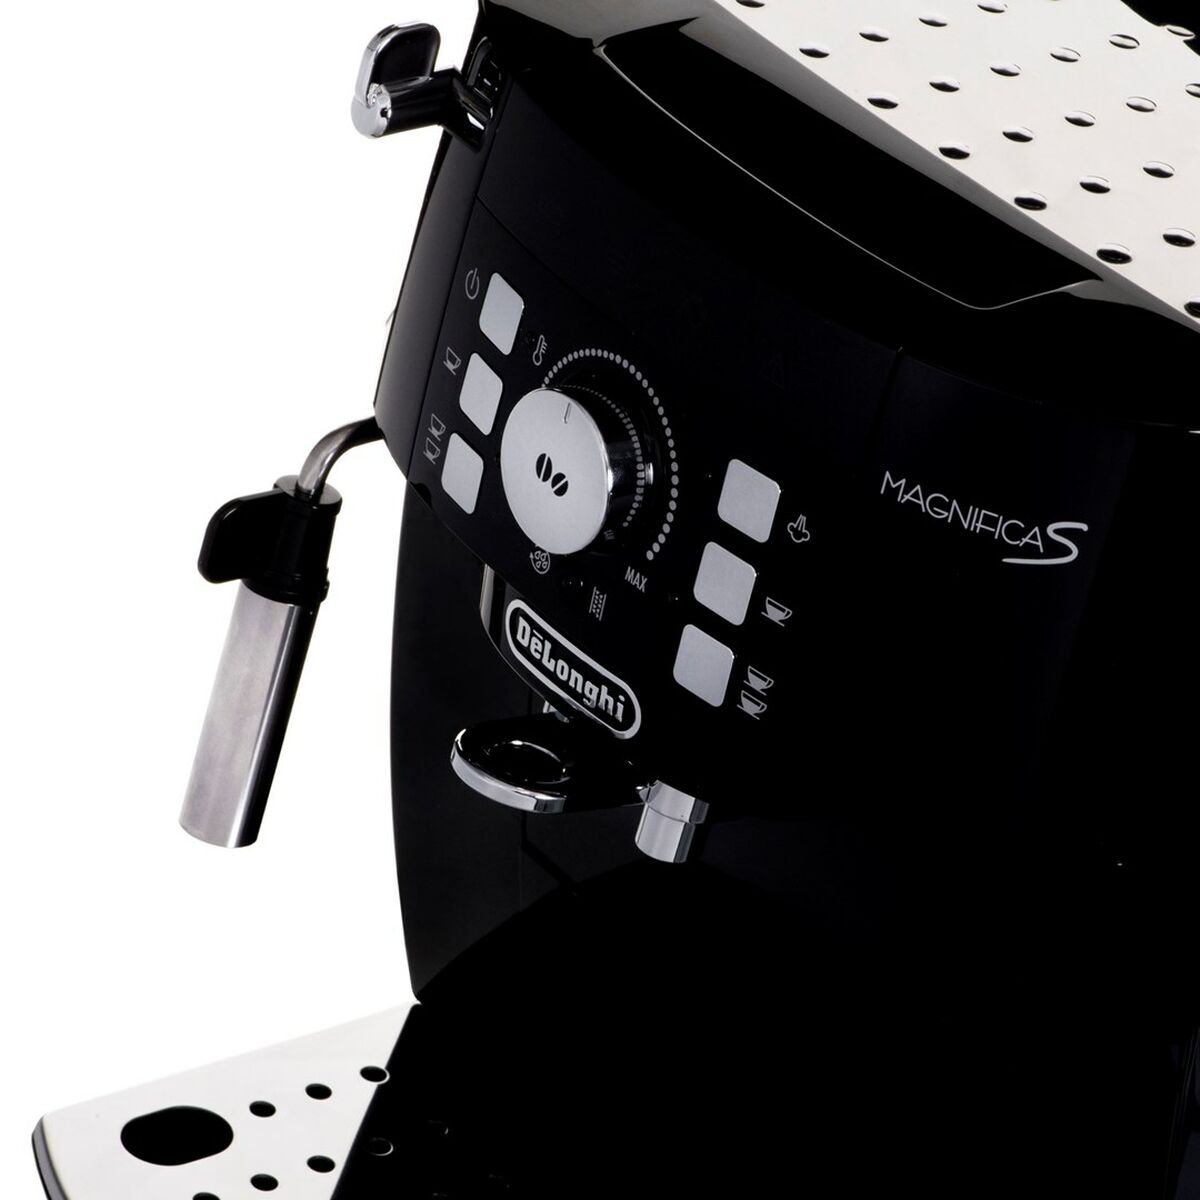 Superautomatische Kaffeemaschine DeLonghi Magnifica S ECAM Schwarz - CA International  